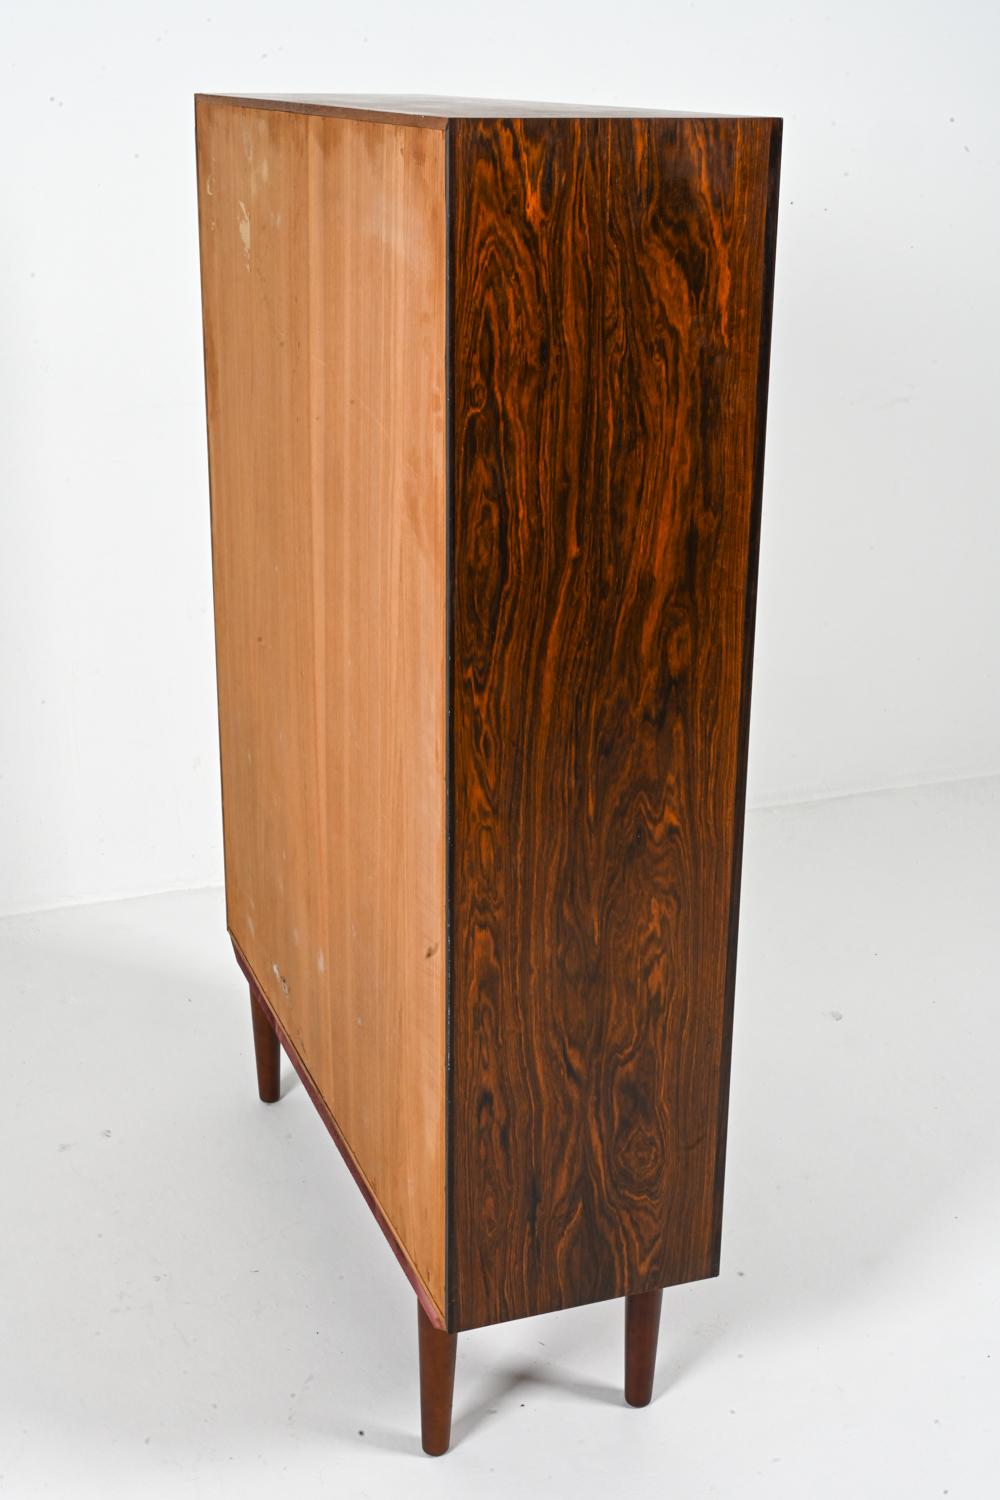 Erik Brouer Rosewood Display Cabinet, Denmark 1960s For Sale 6